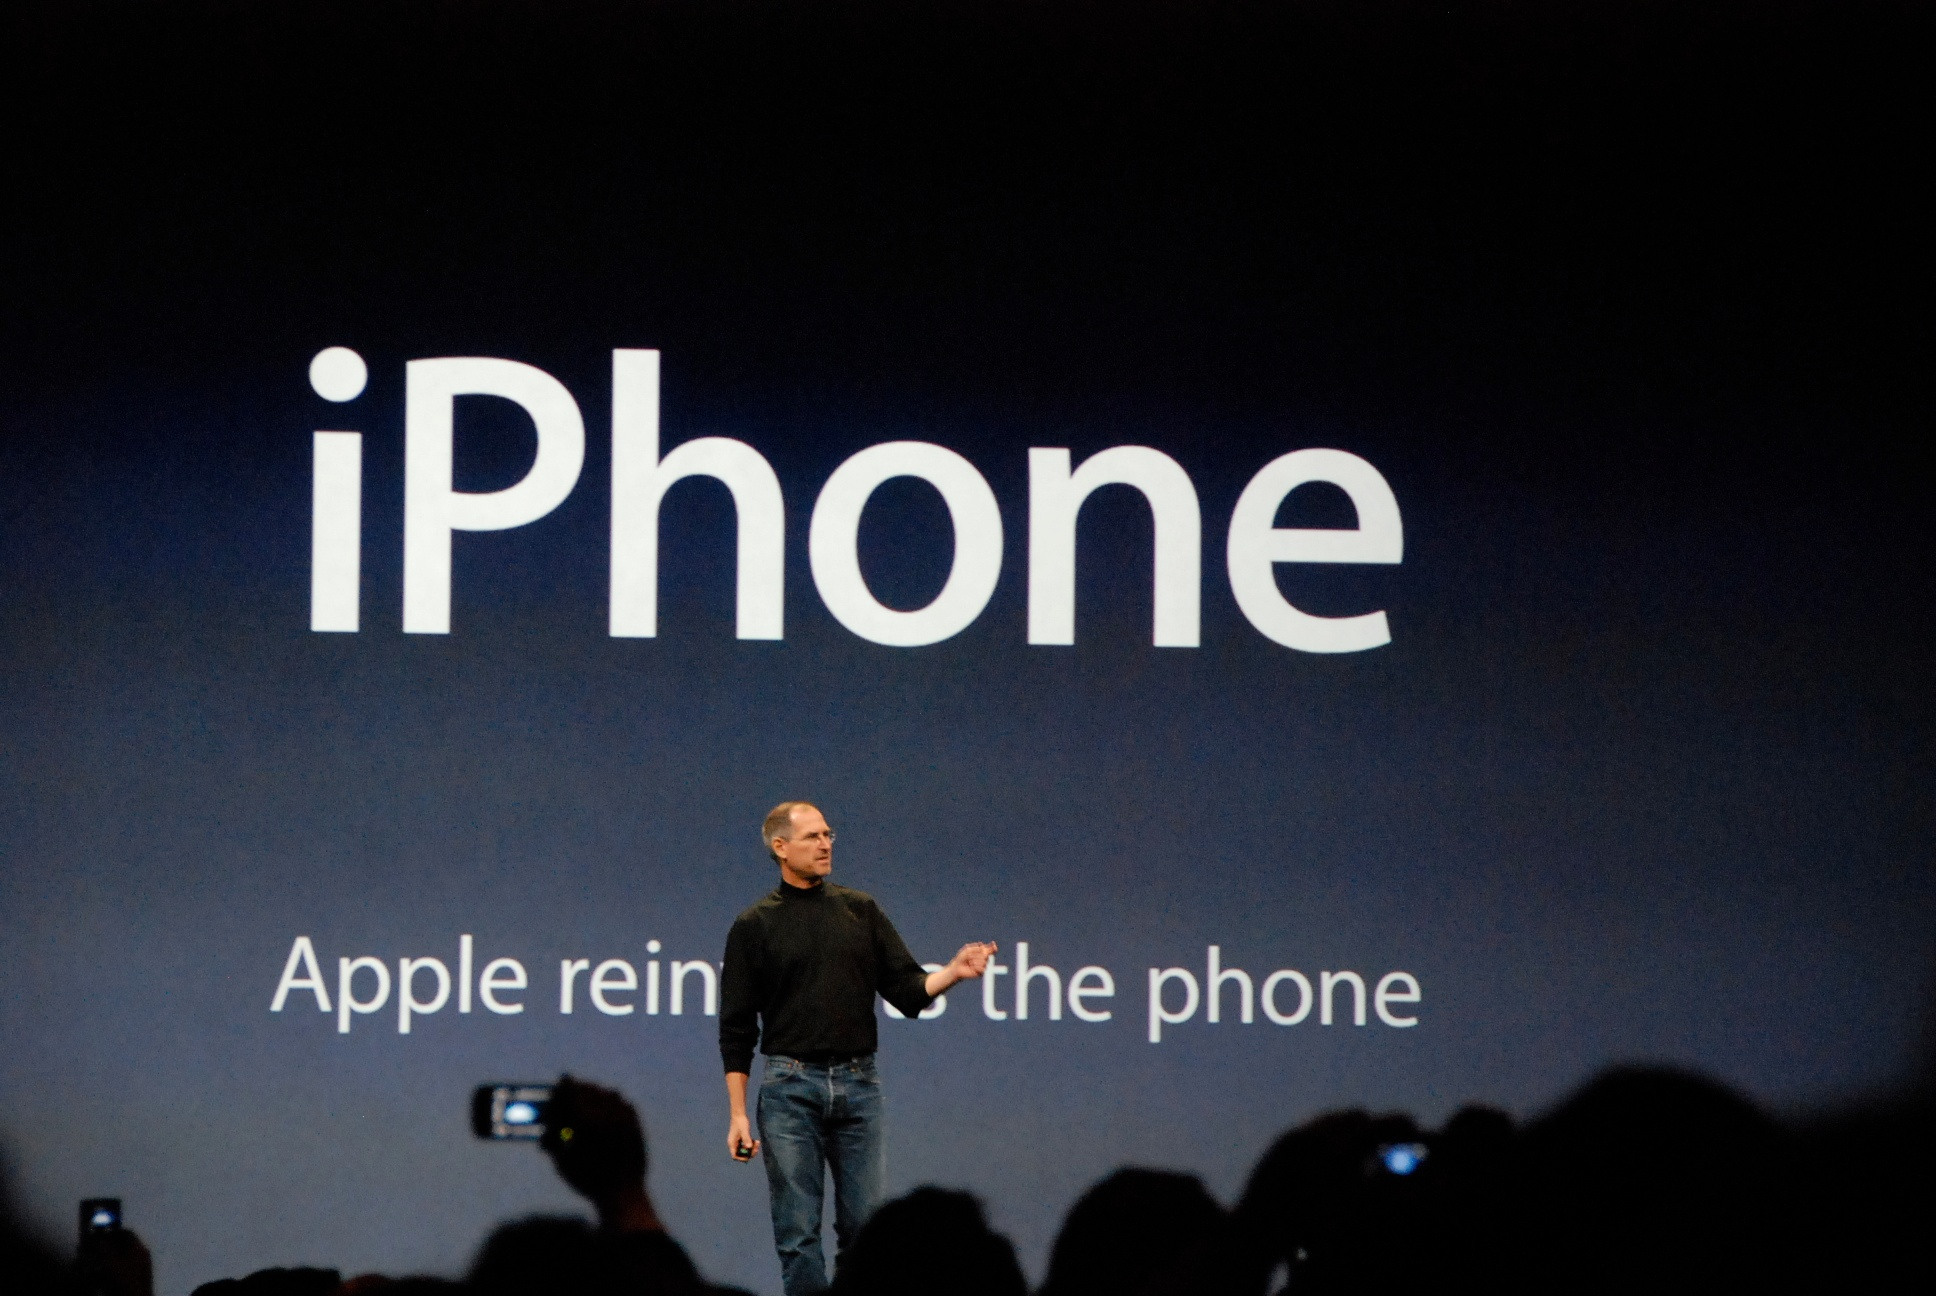 Steve_Jobs_presents_iPhone